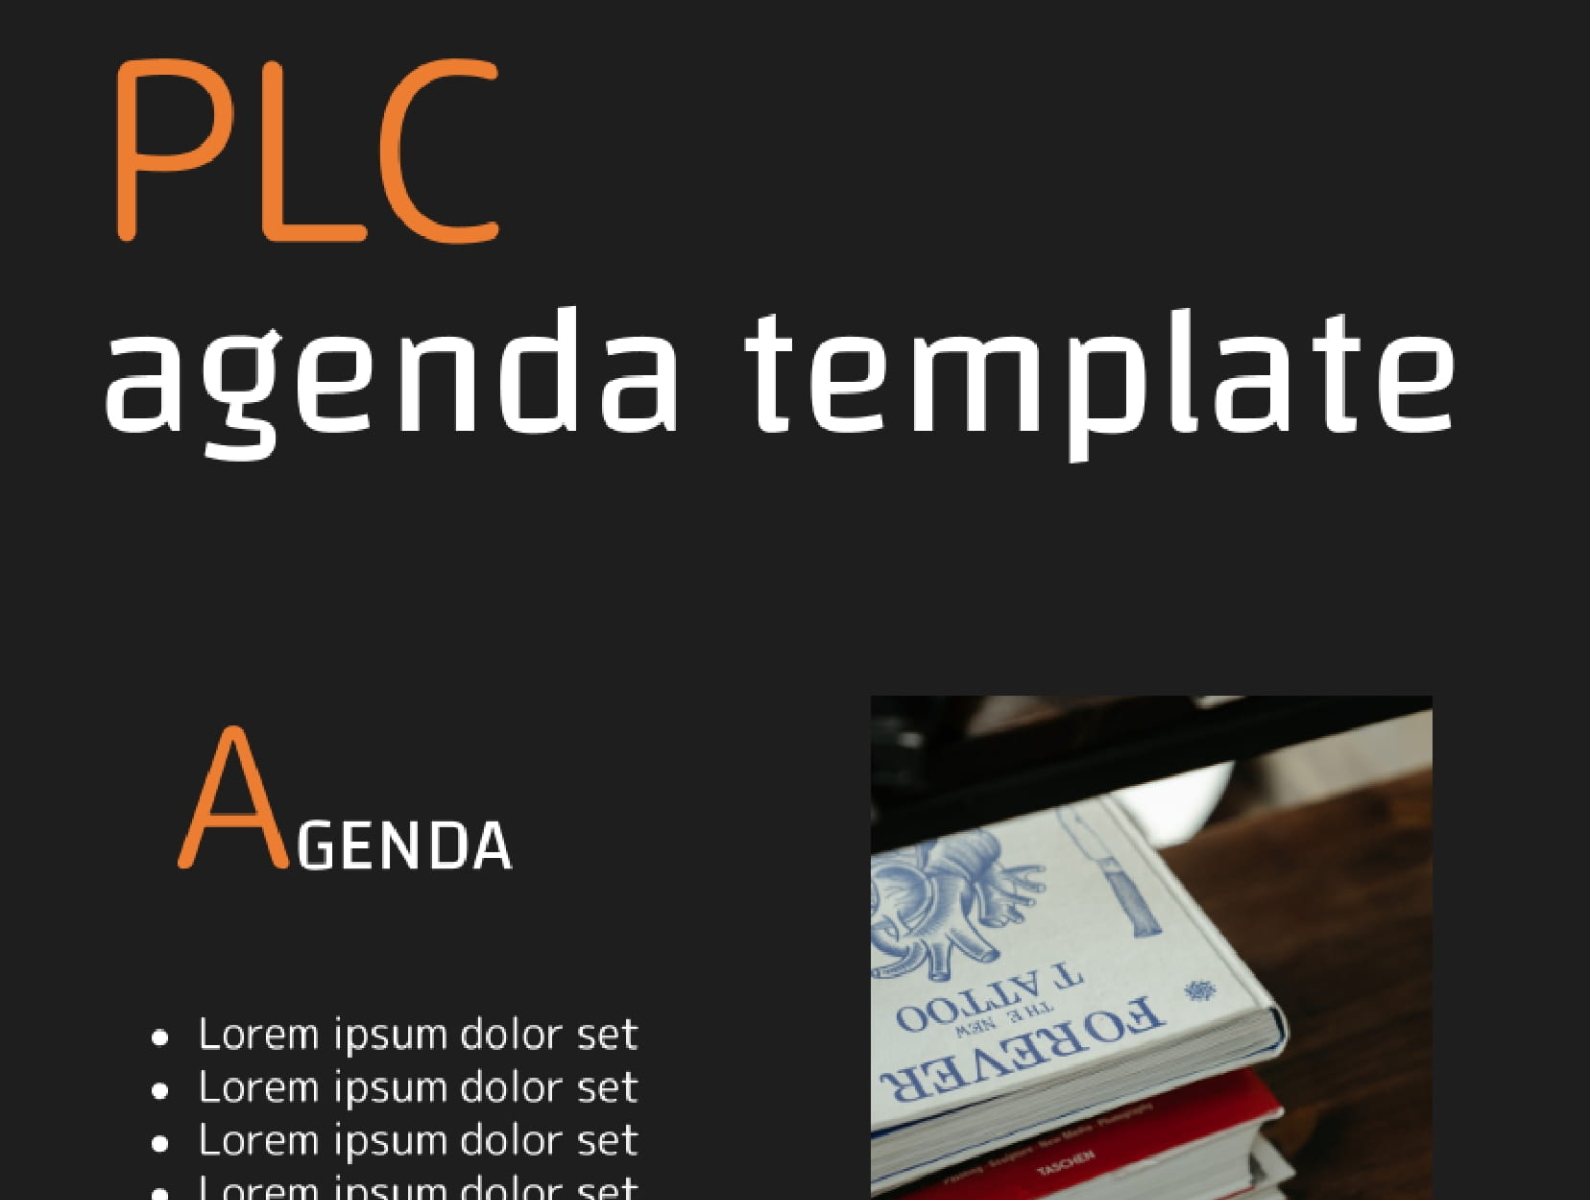 PLC Agenda Template by FREE Google Docs & Google Slide templates on